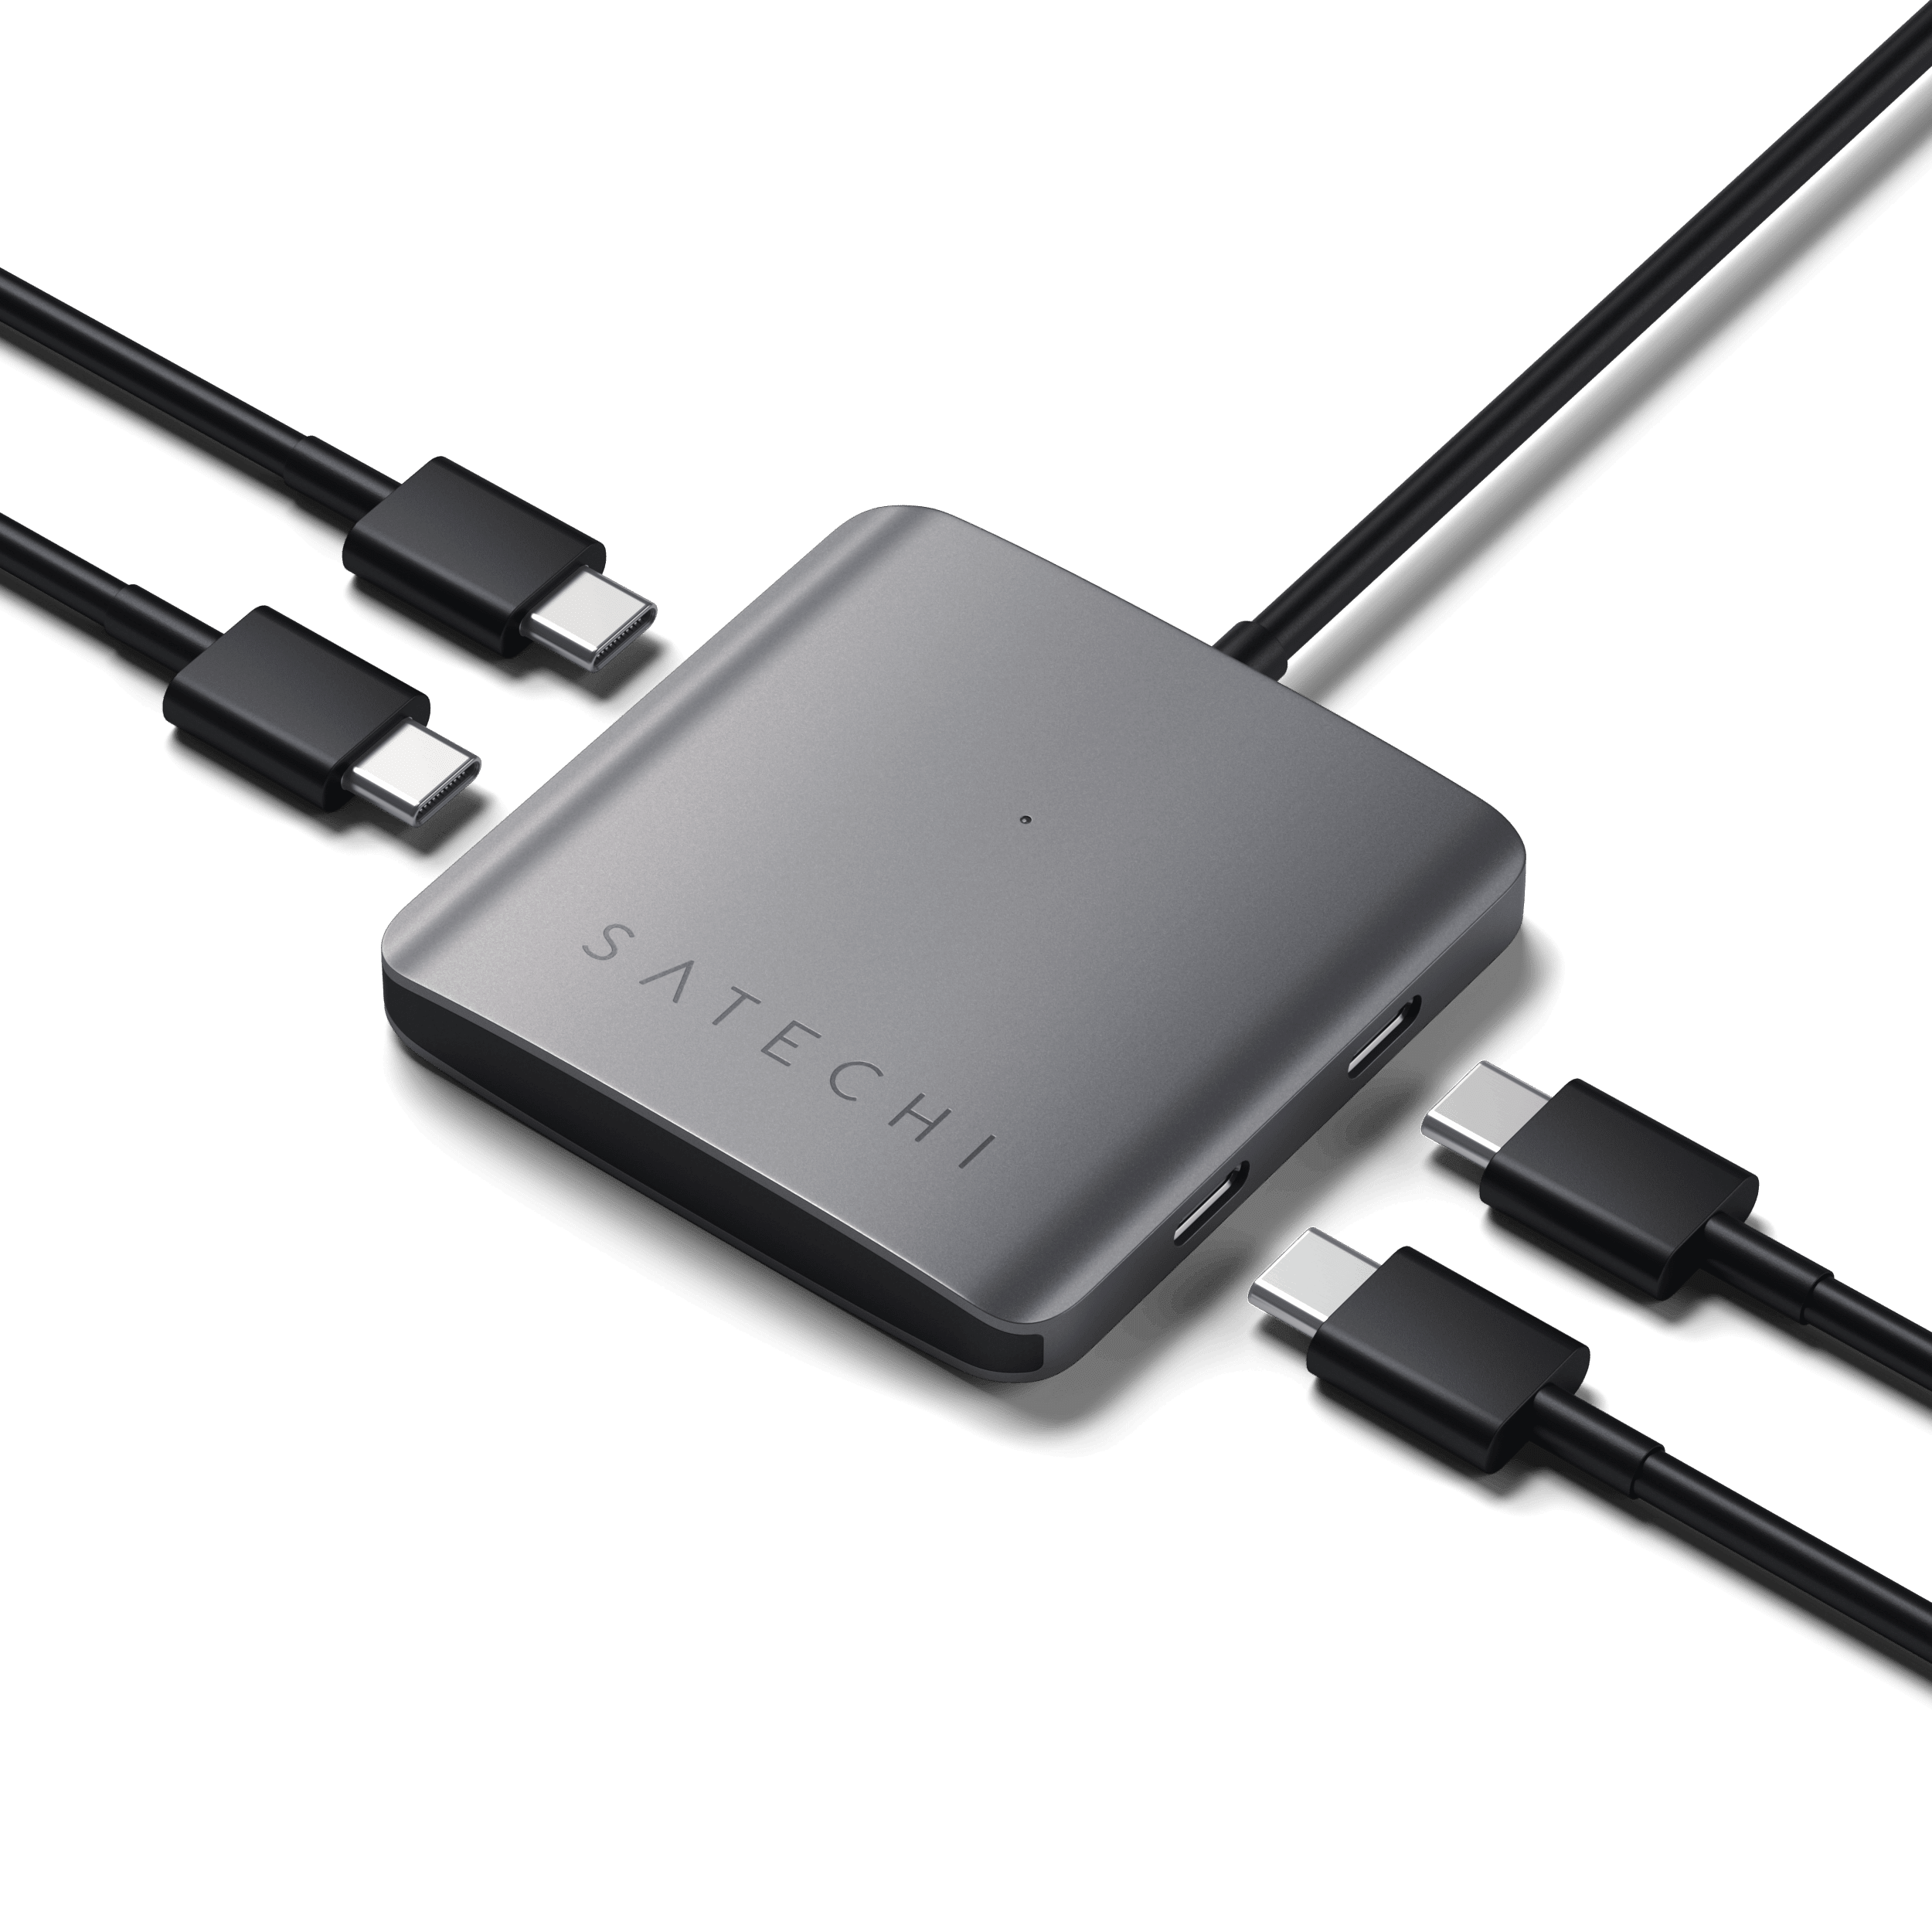 USB 3.0 4 Port Hub + USB-C Cable (USB Type-C)